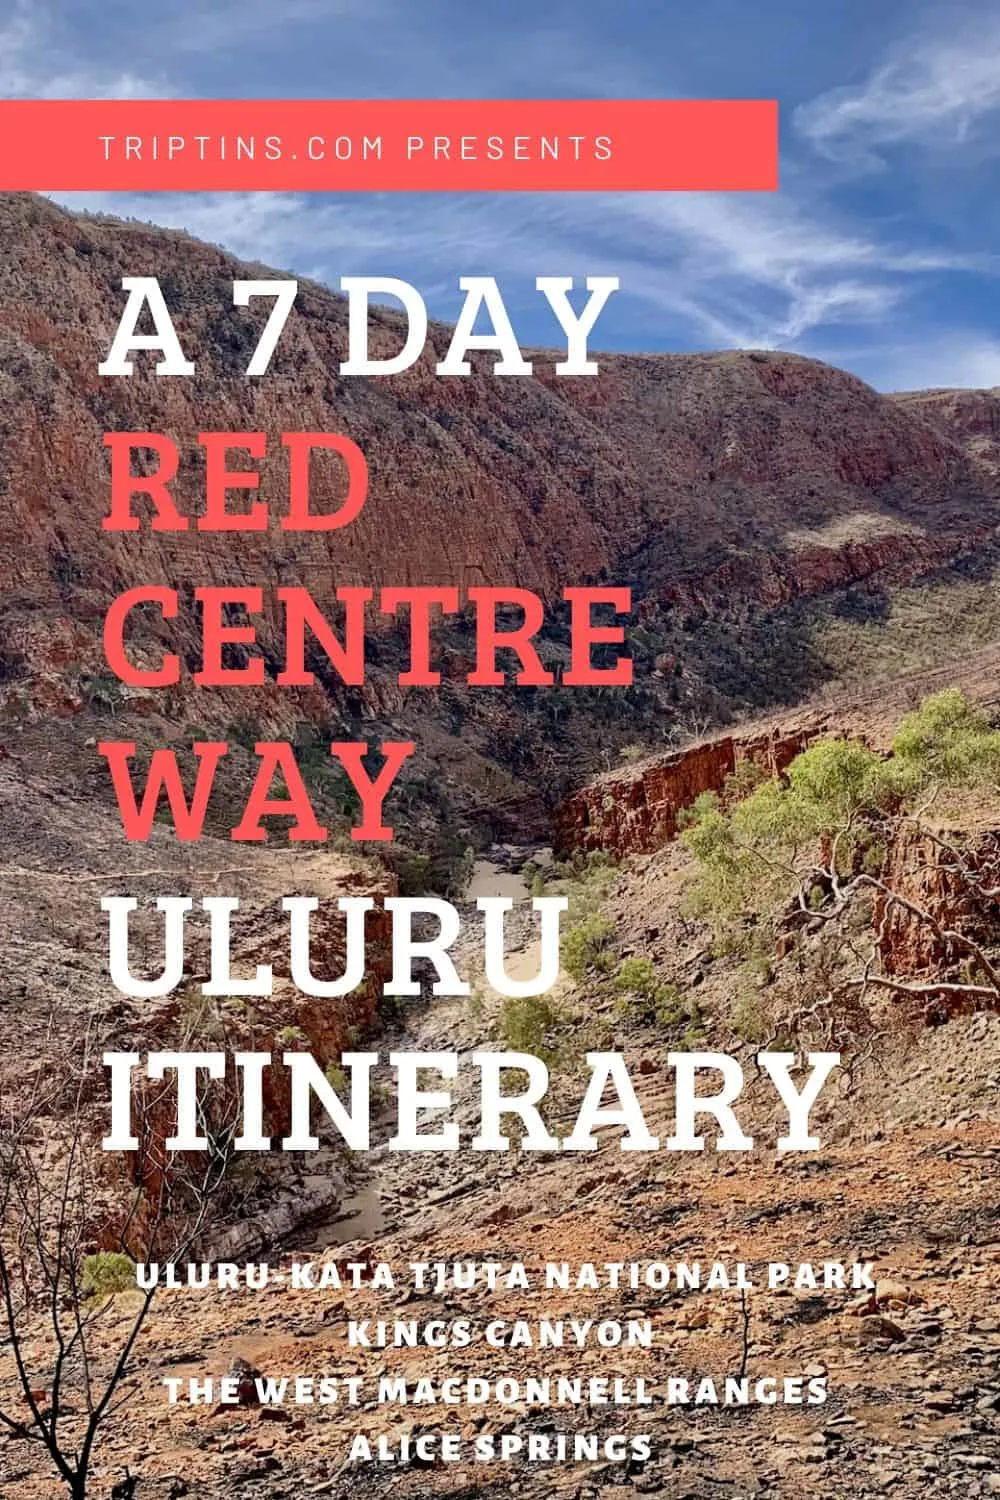 Red Centre Way Uluru Itinerary Guide